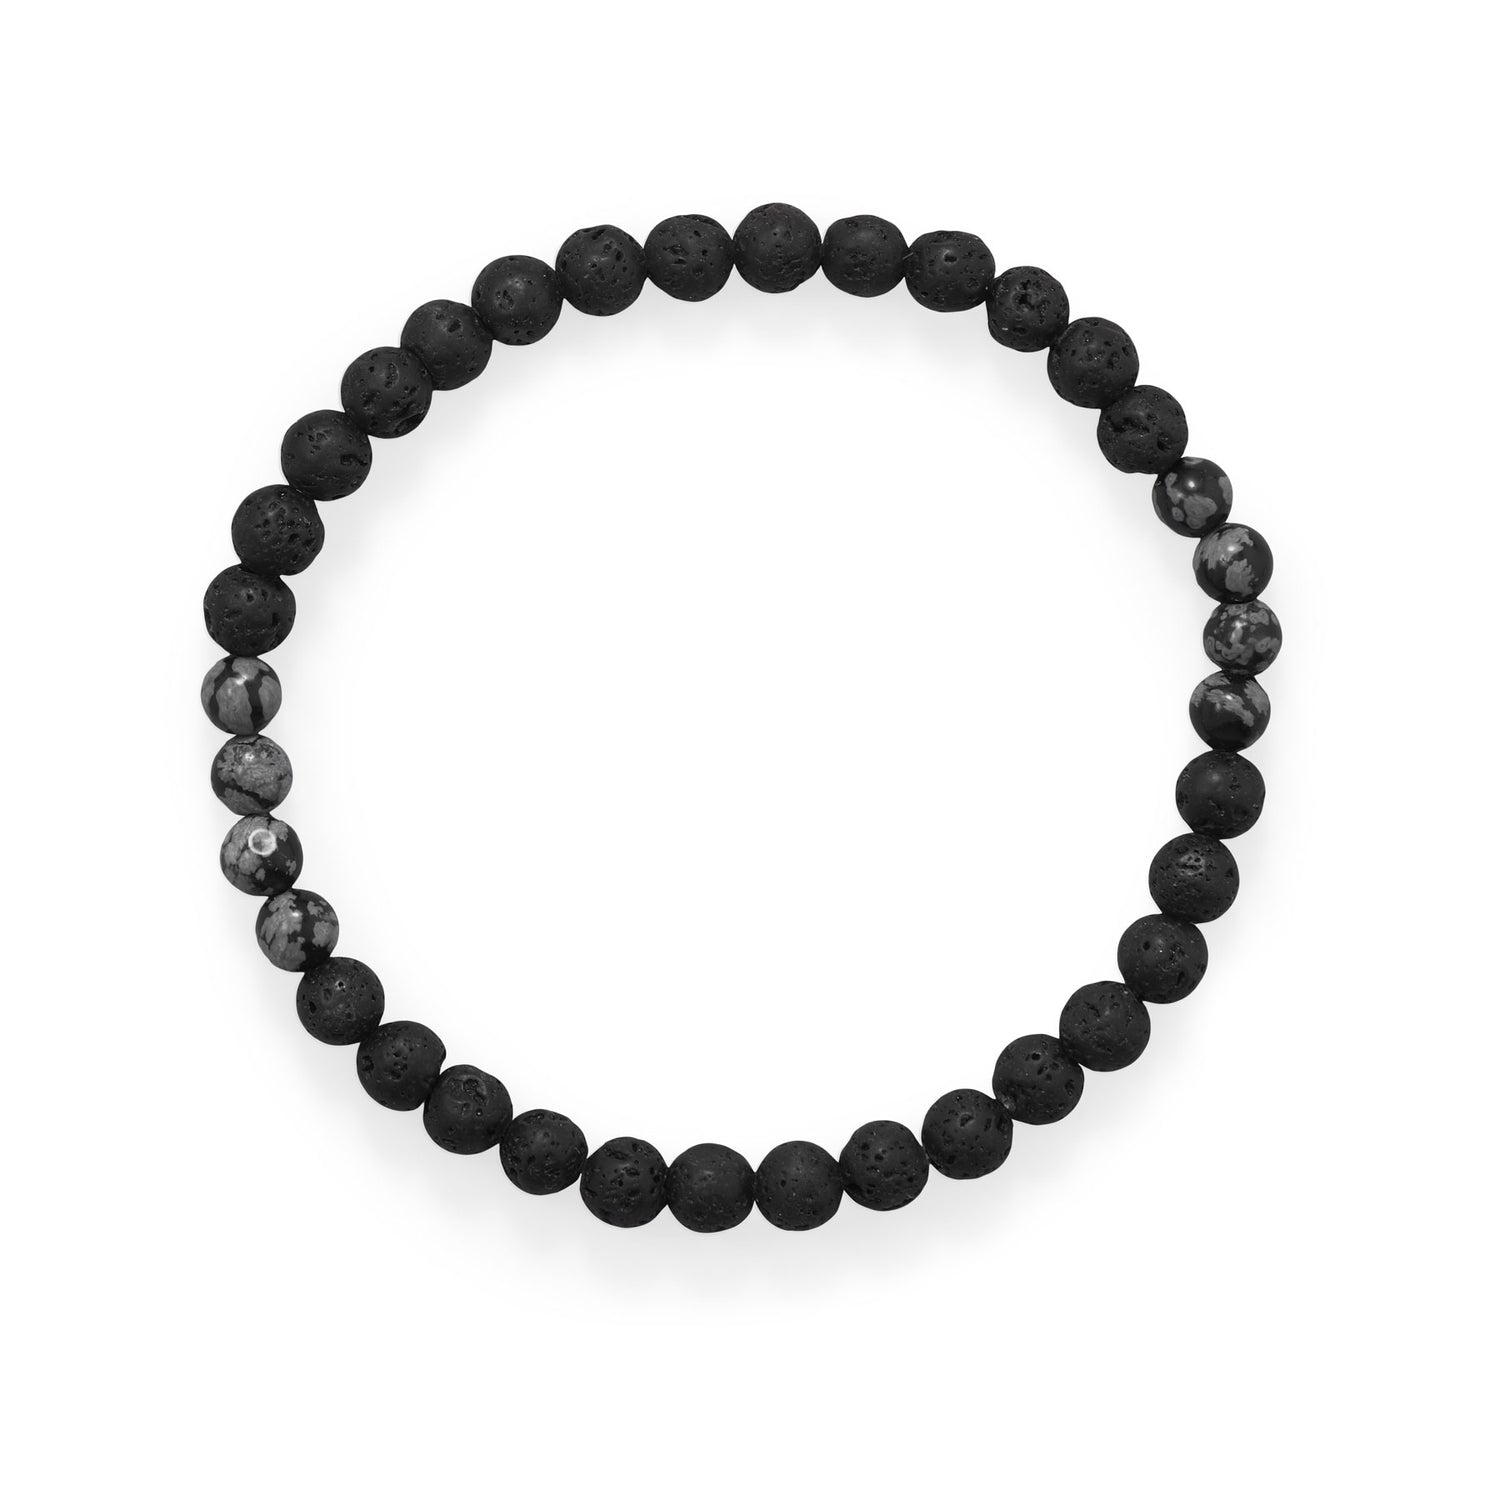 8" Black Lava and Snowflake Obsidian Stretch Bracelet